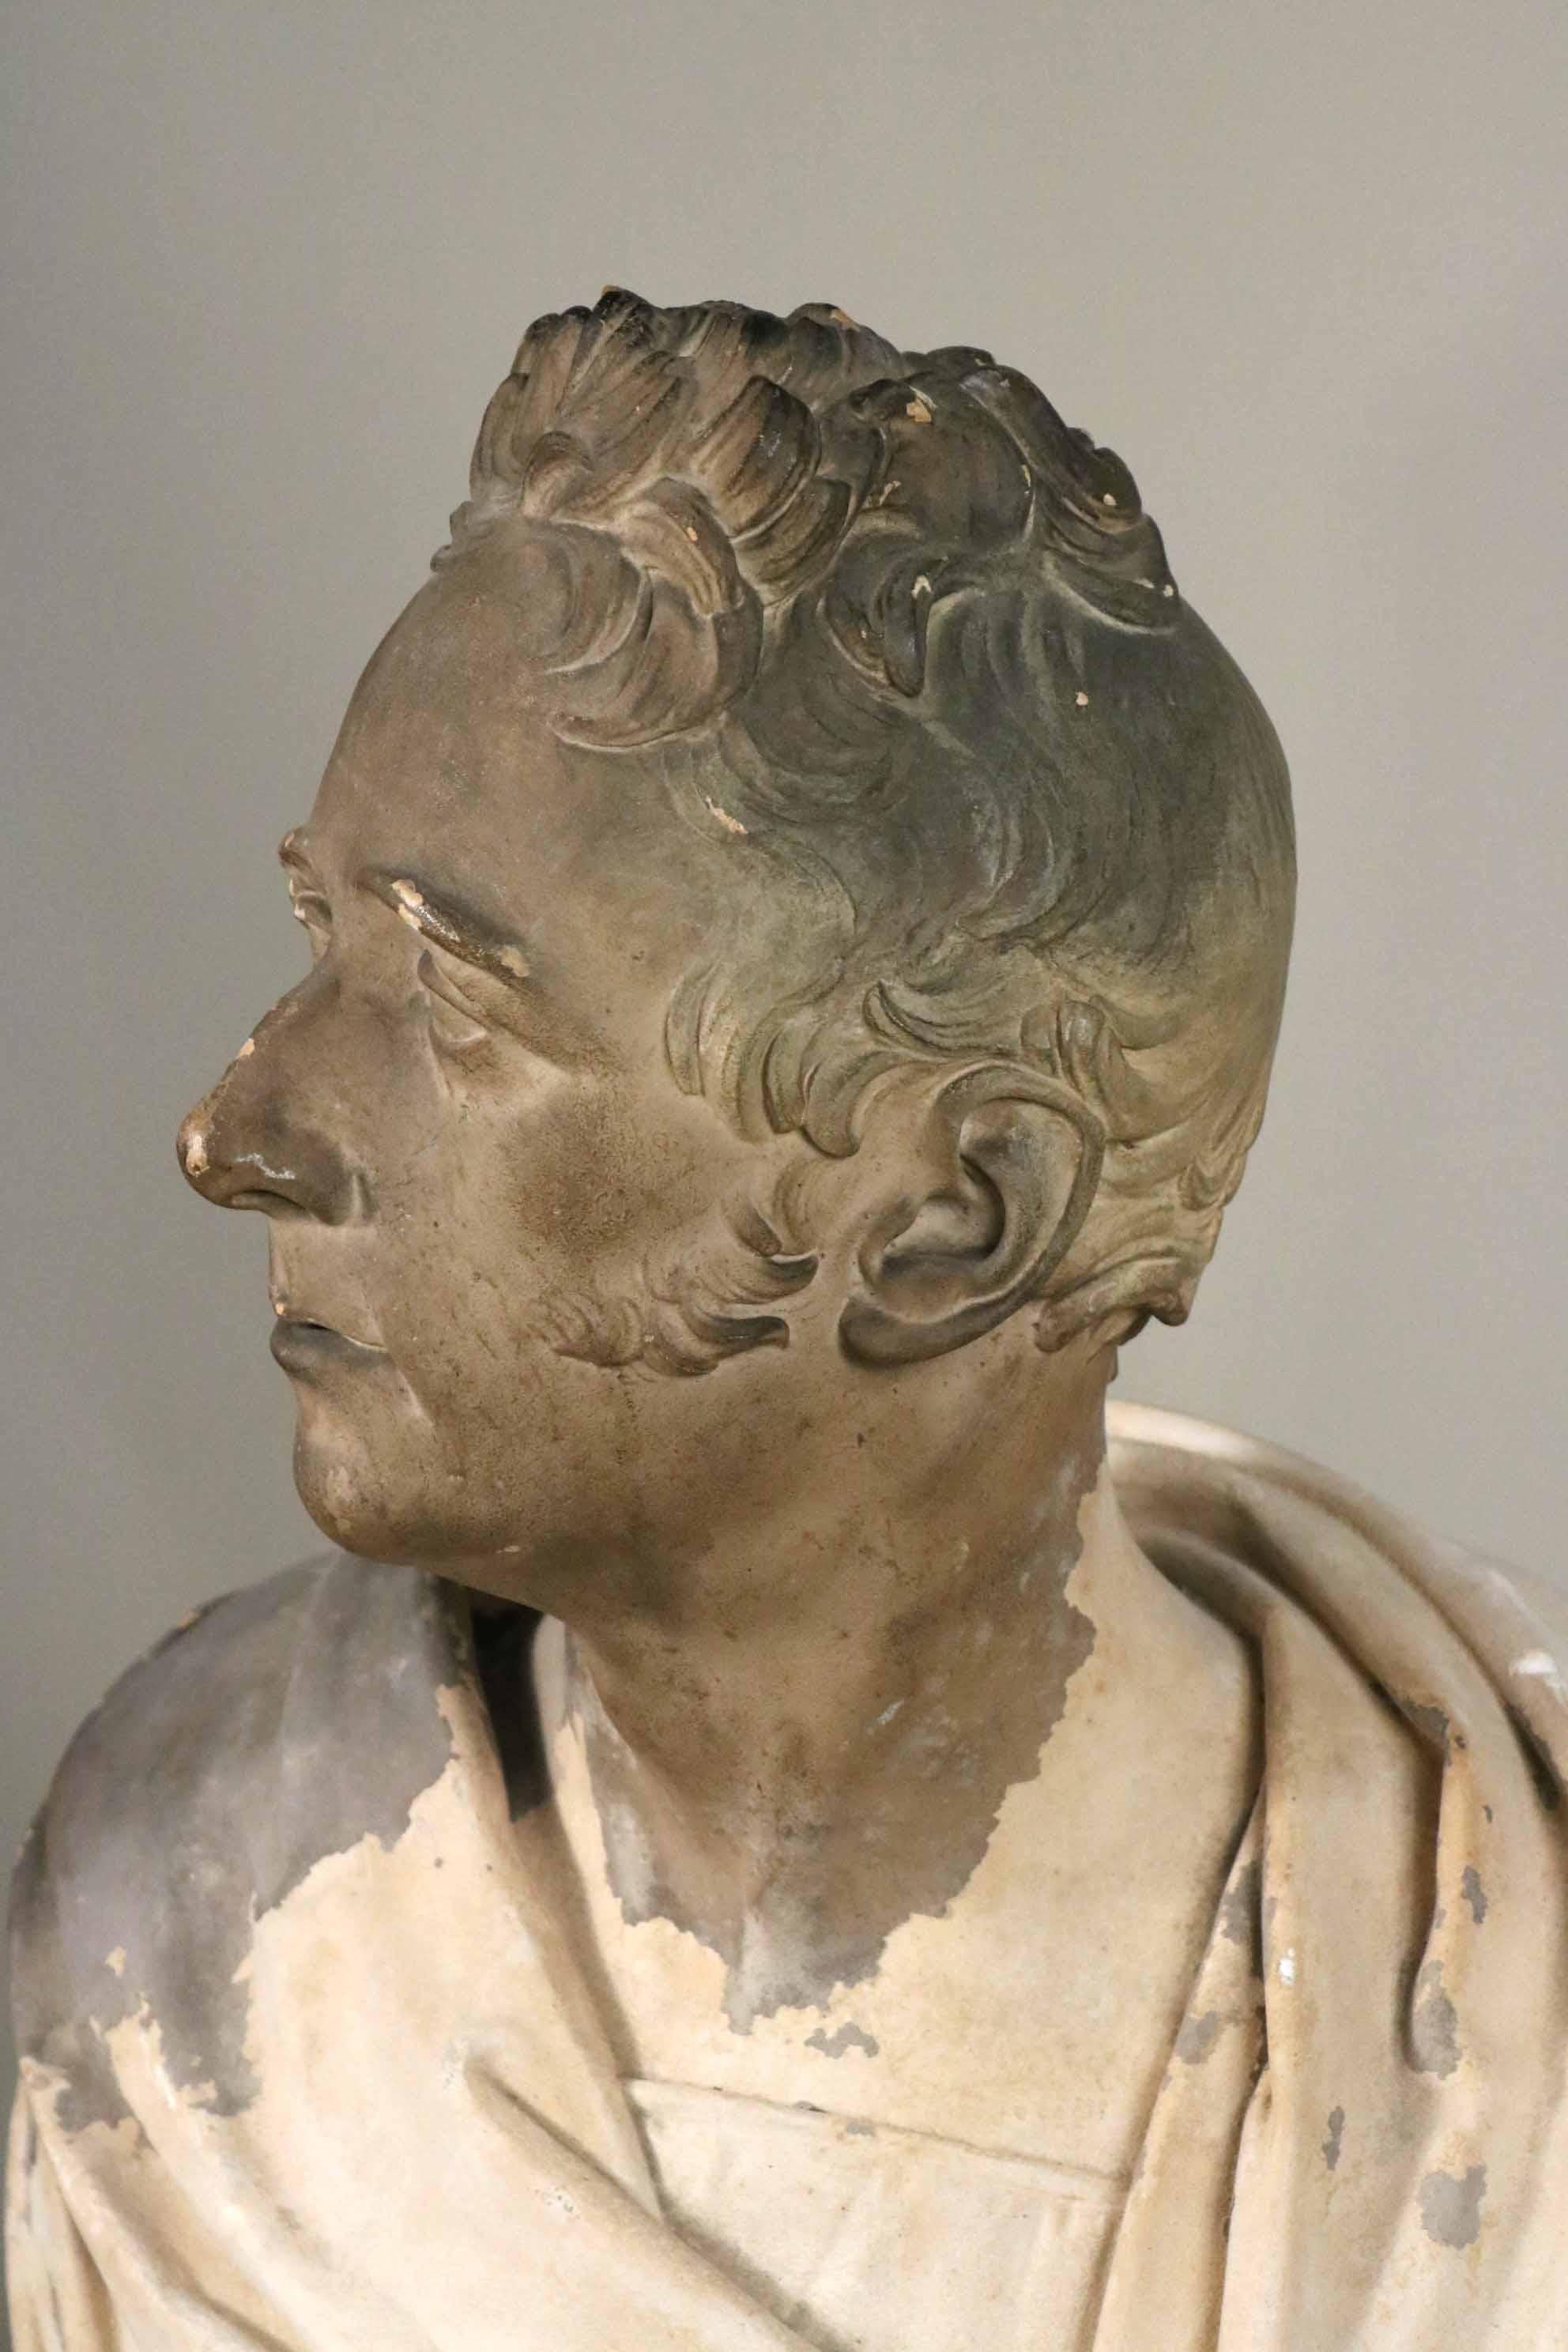 English Period 19th Century Regency Plaster Bust of a Man by Samuel Joseph